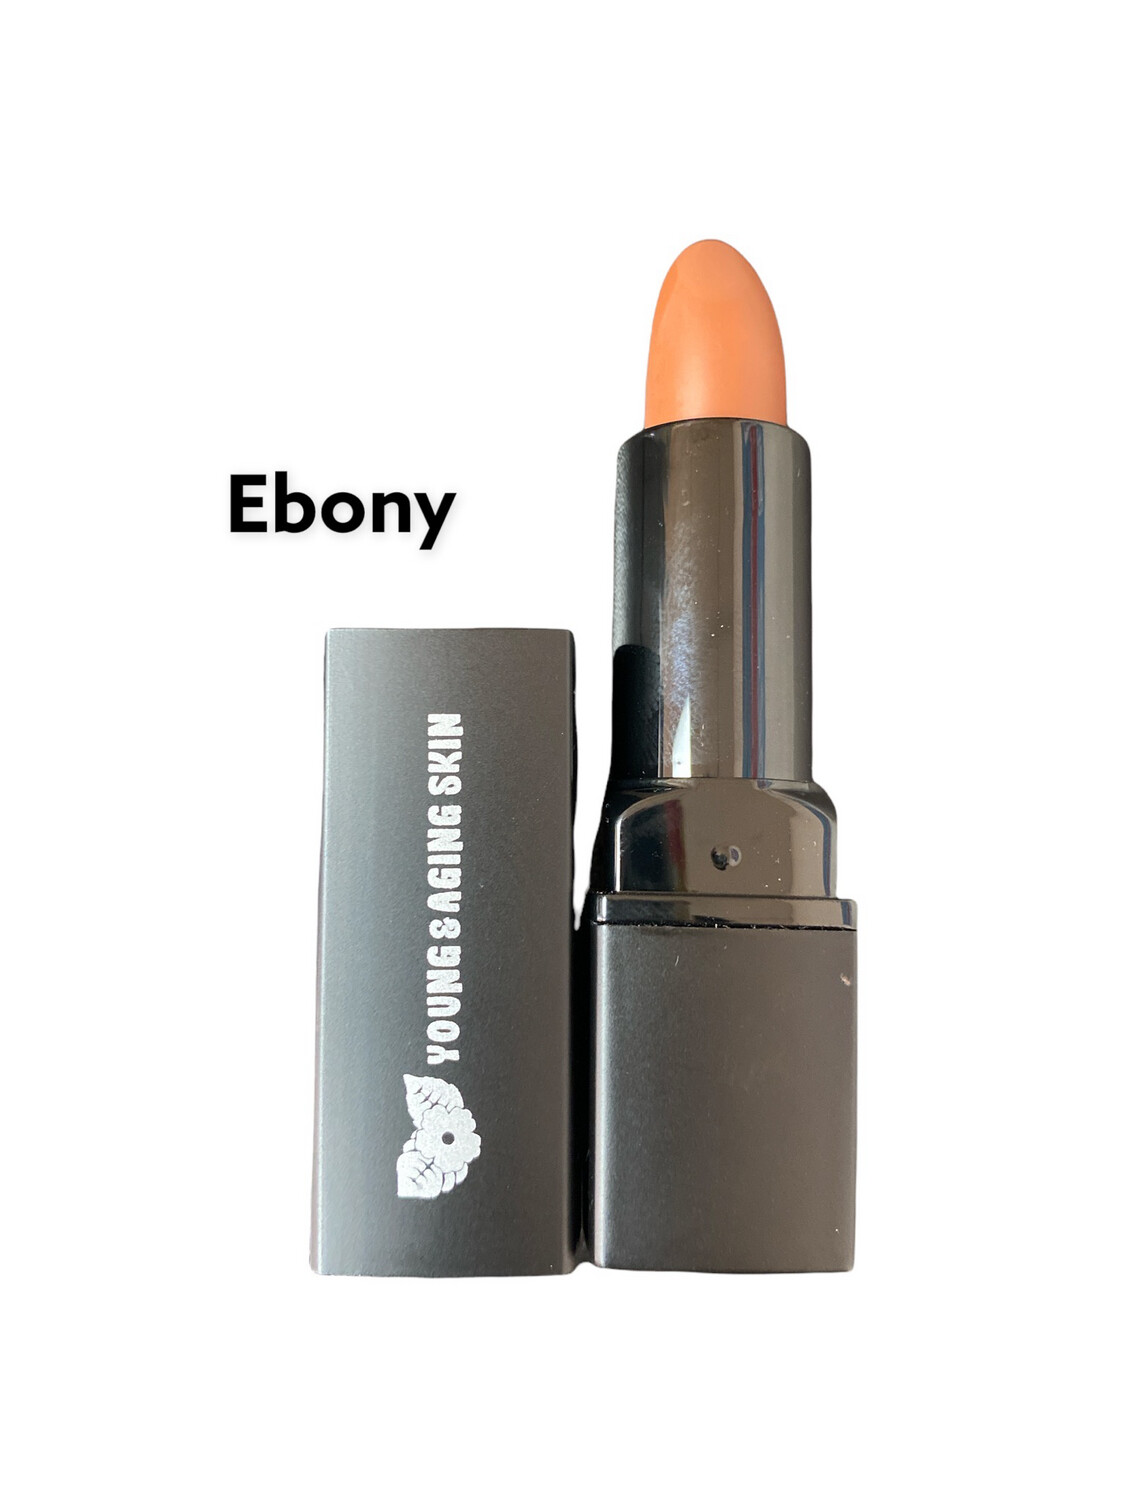 Concealer/Contour Stick in Ebony